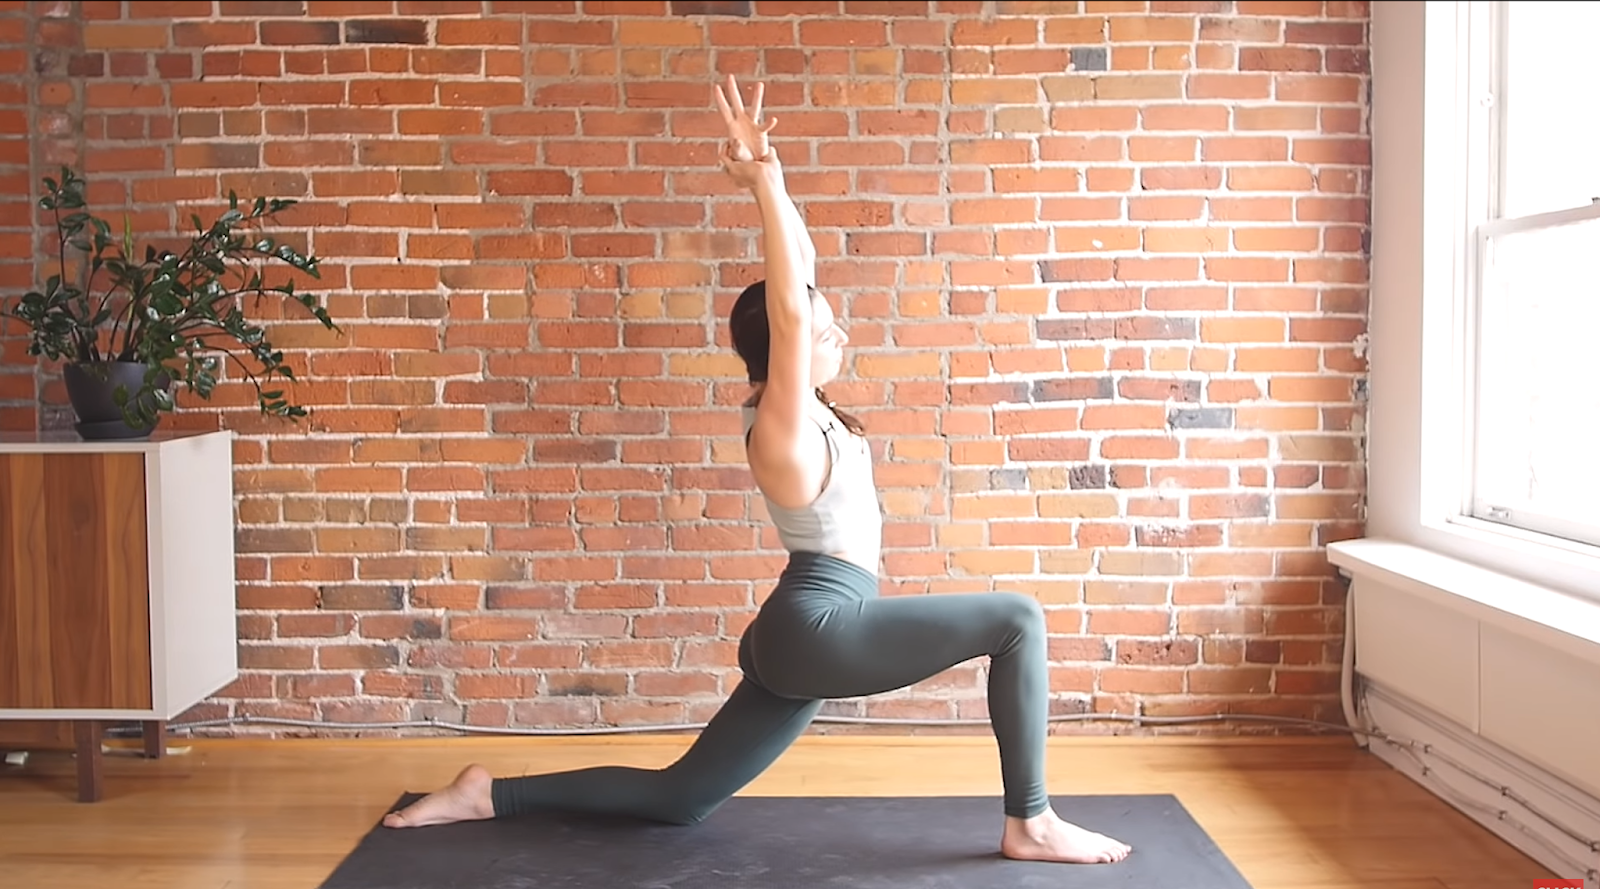 Does bending the knees help improve flexibility? : r/flexibility